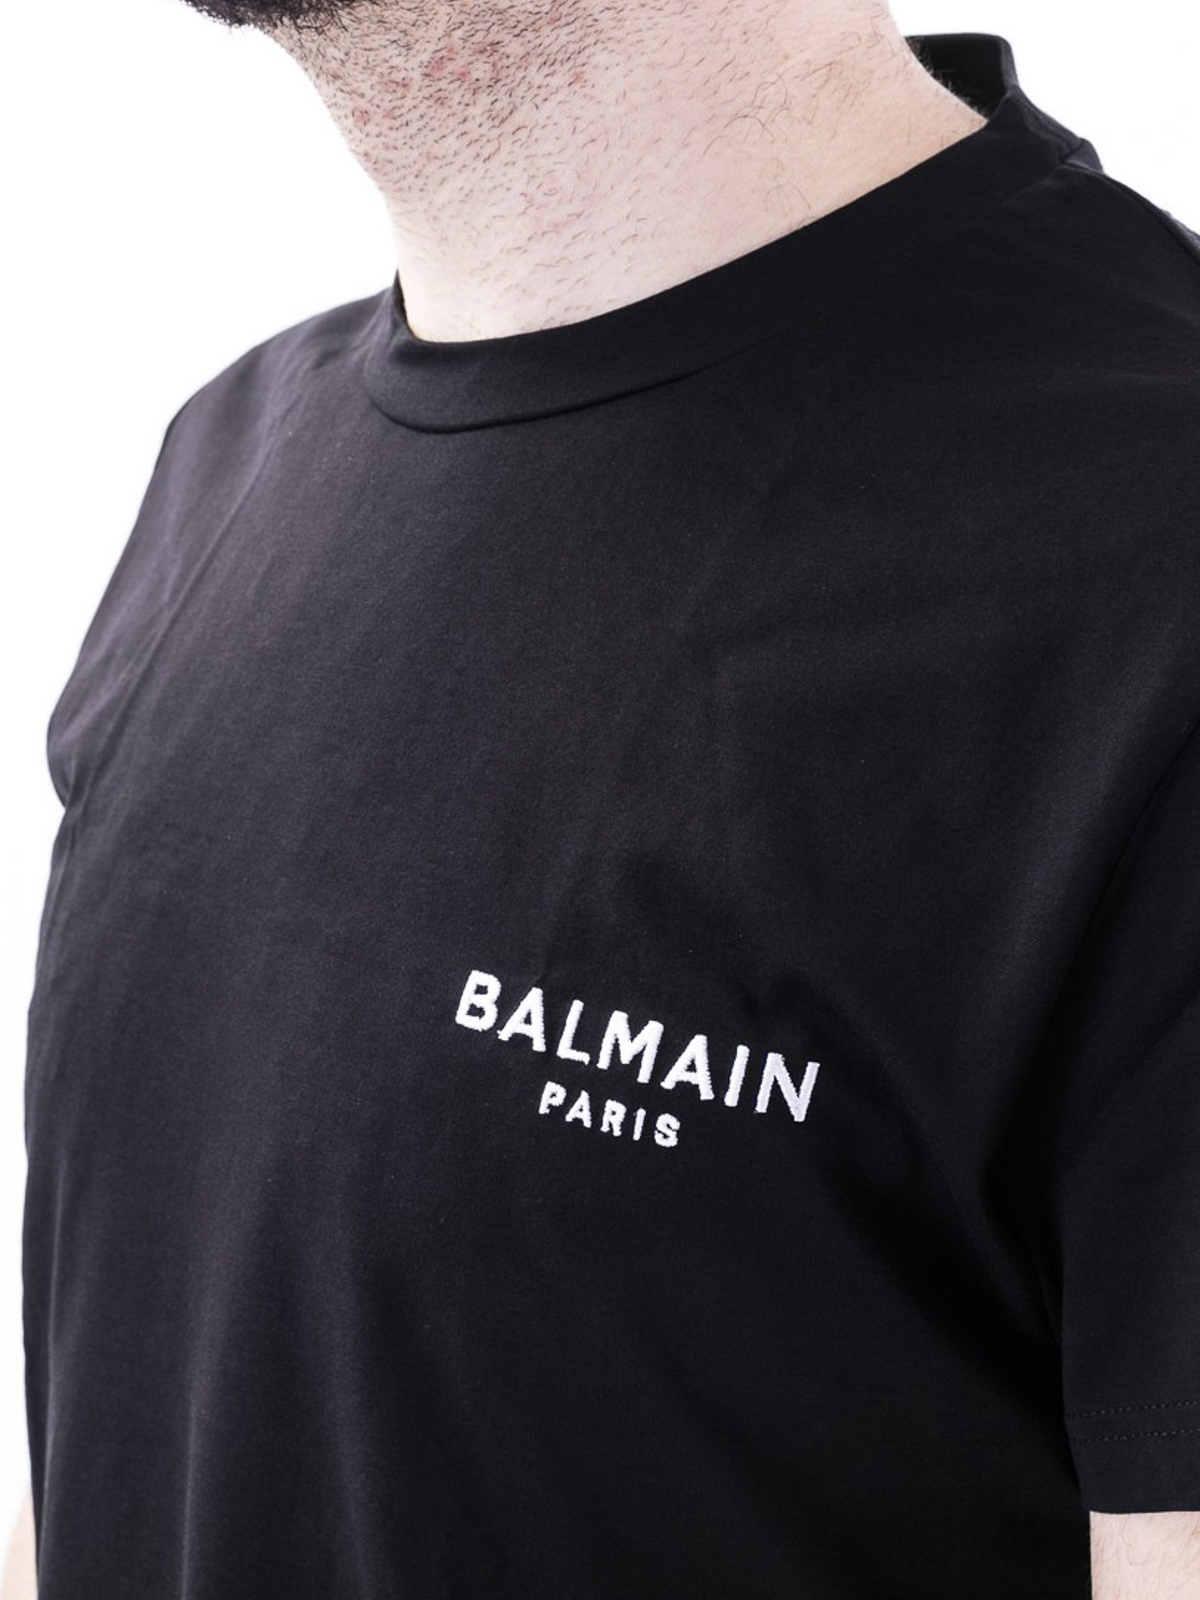 T-shirts Balmain - Balmain embroidery black T-shirt - BRM305060001